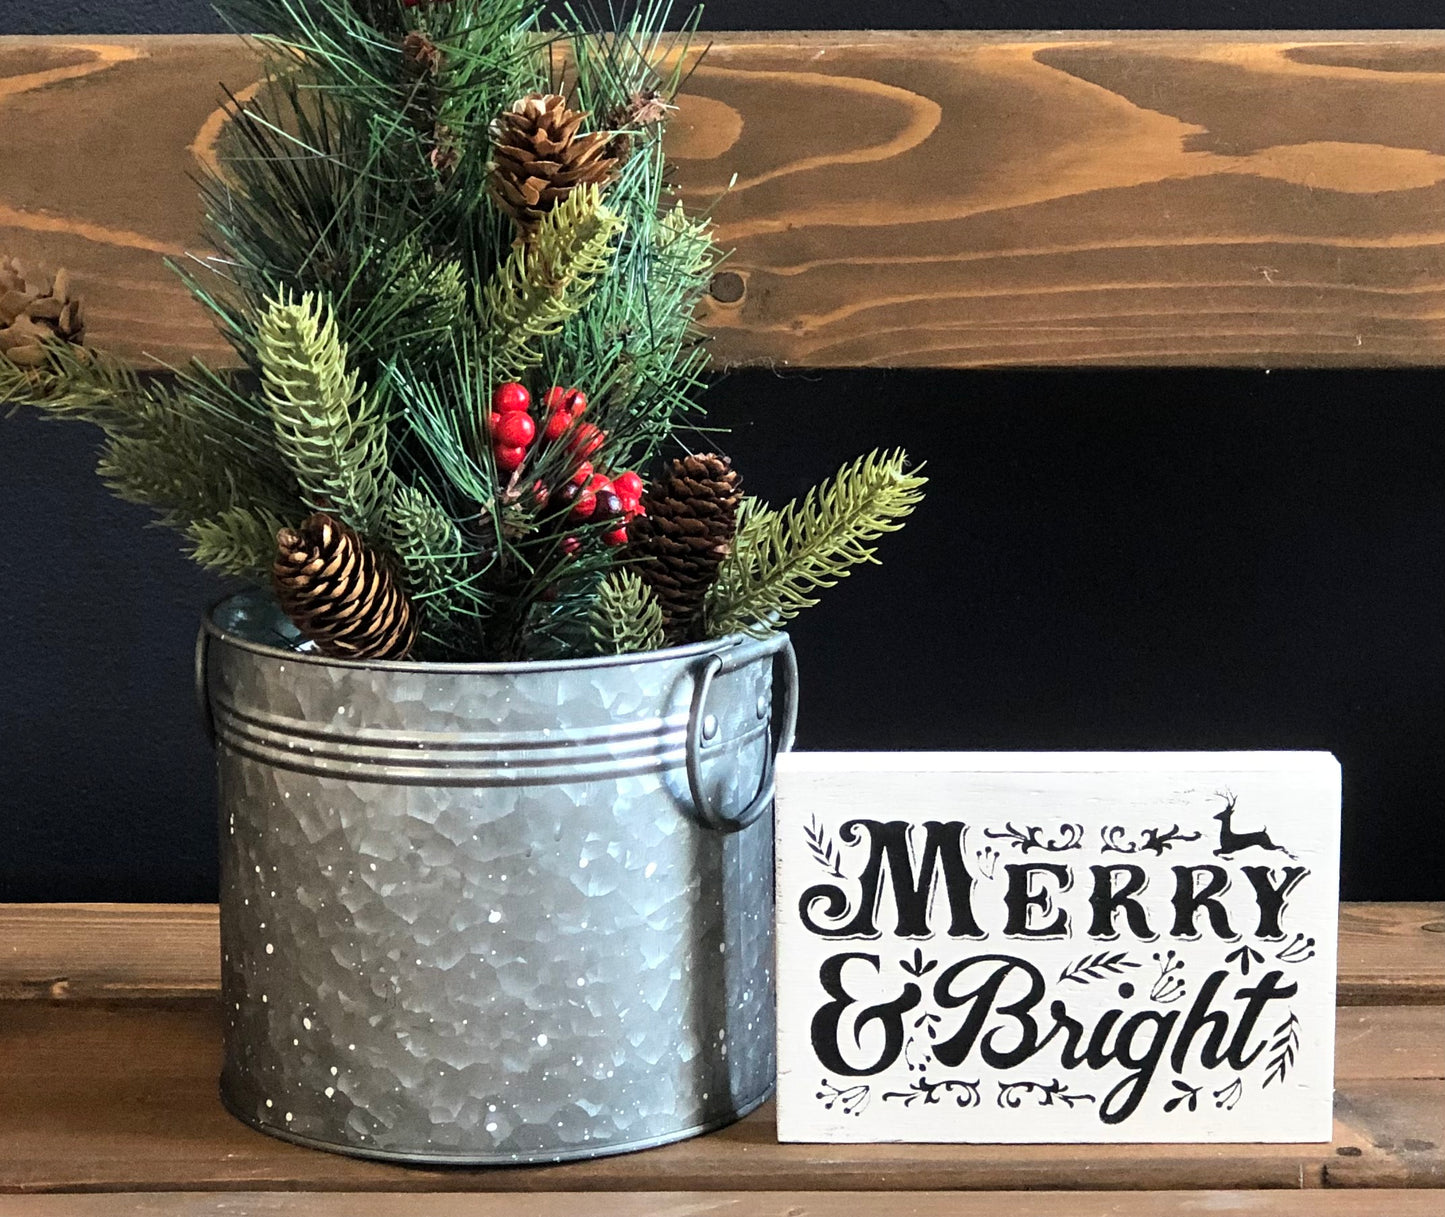 Merry & Bright Vintage - Rustic Wood Christmas Shelf Sitter